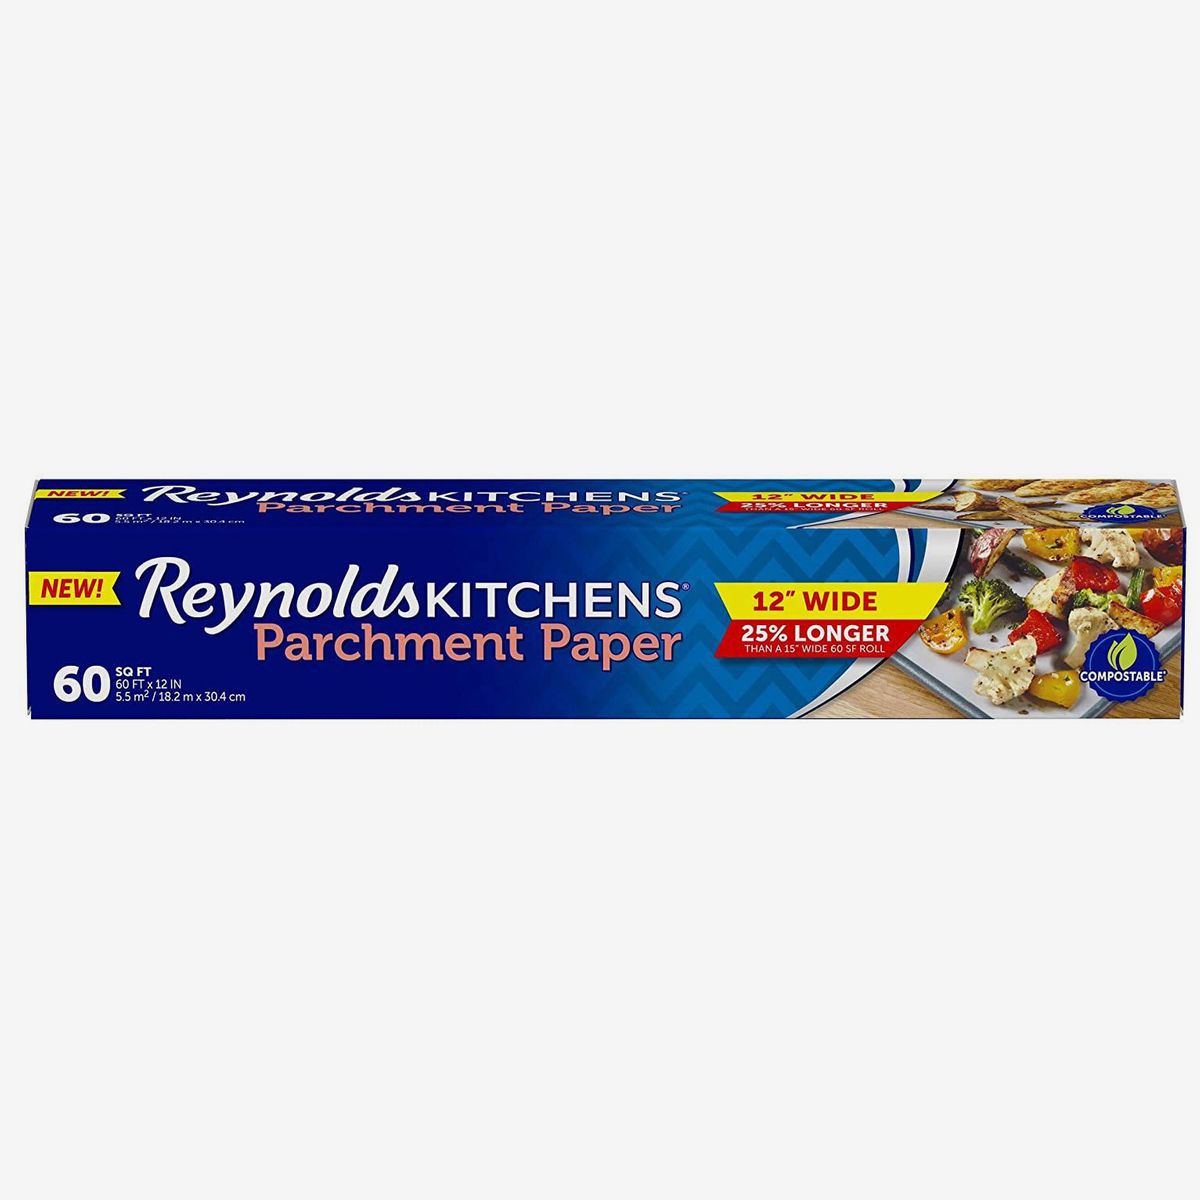 A box of Reynolds non-stick parchment paper